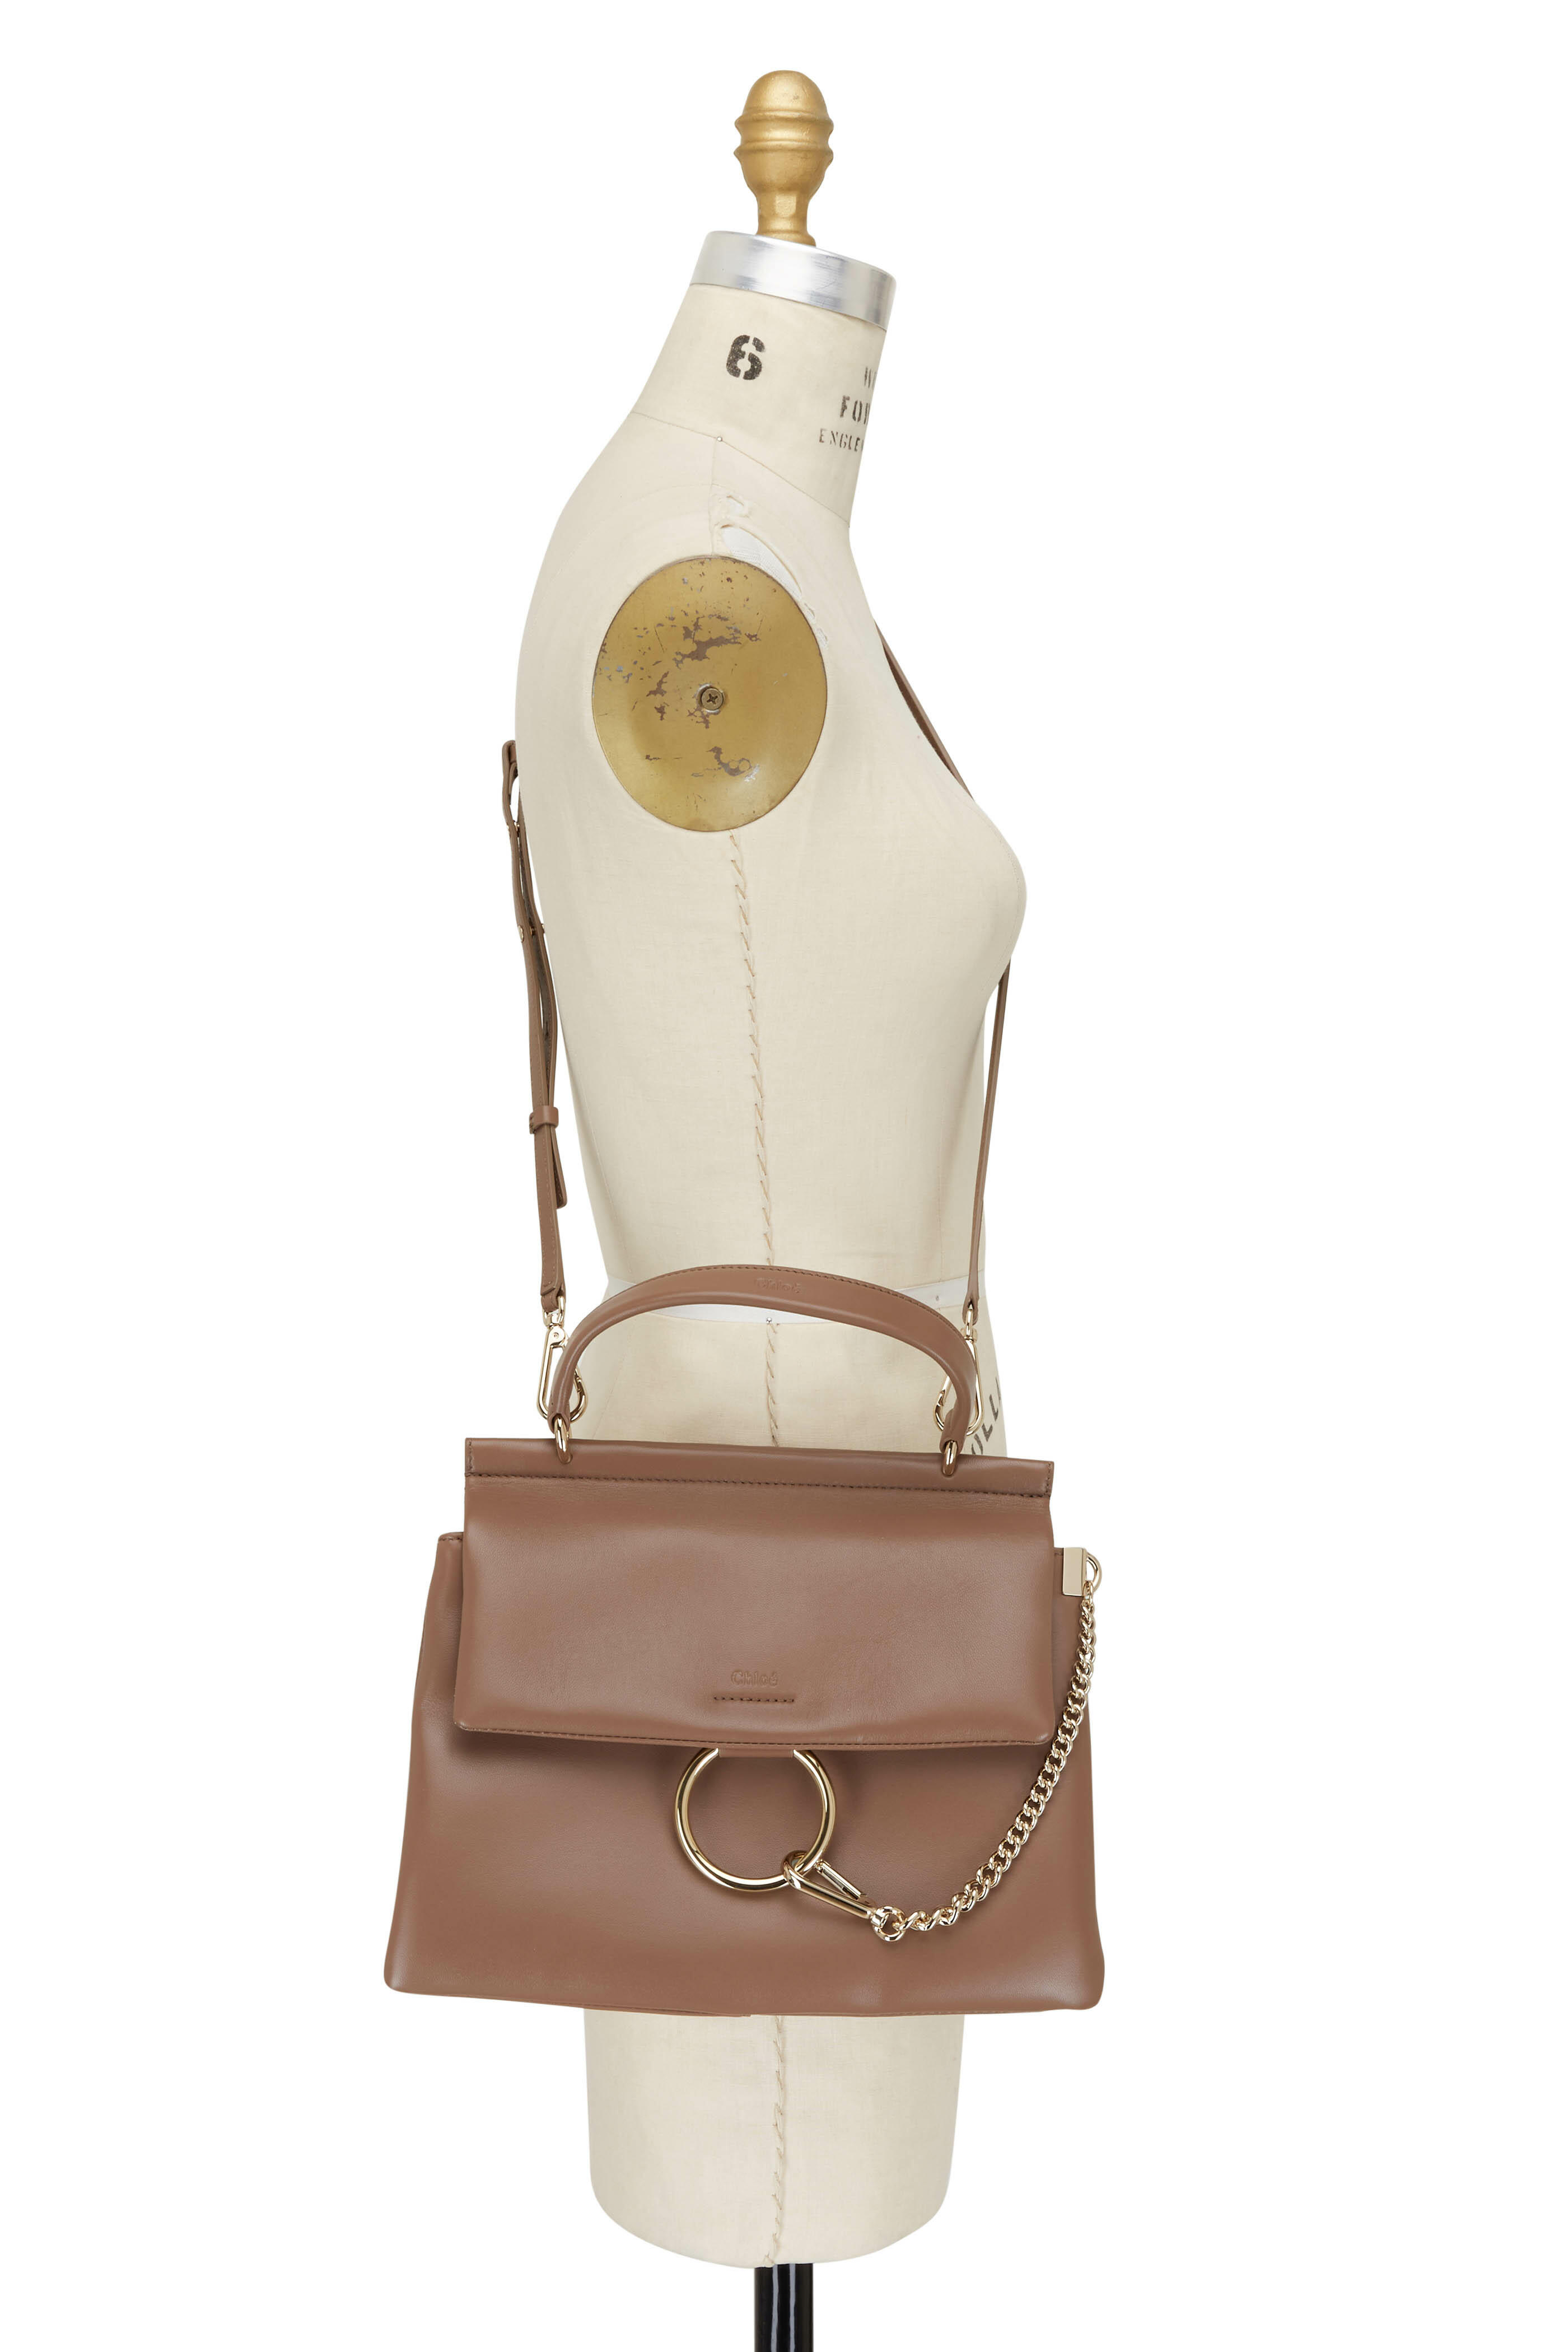 Chloe Faye Day Satchel Shoulder Bag Top Handle Bag Brown Leather